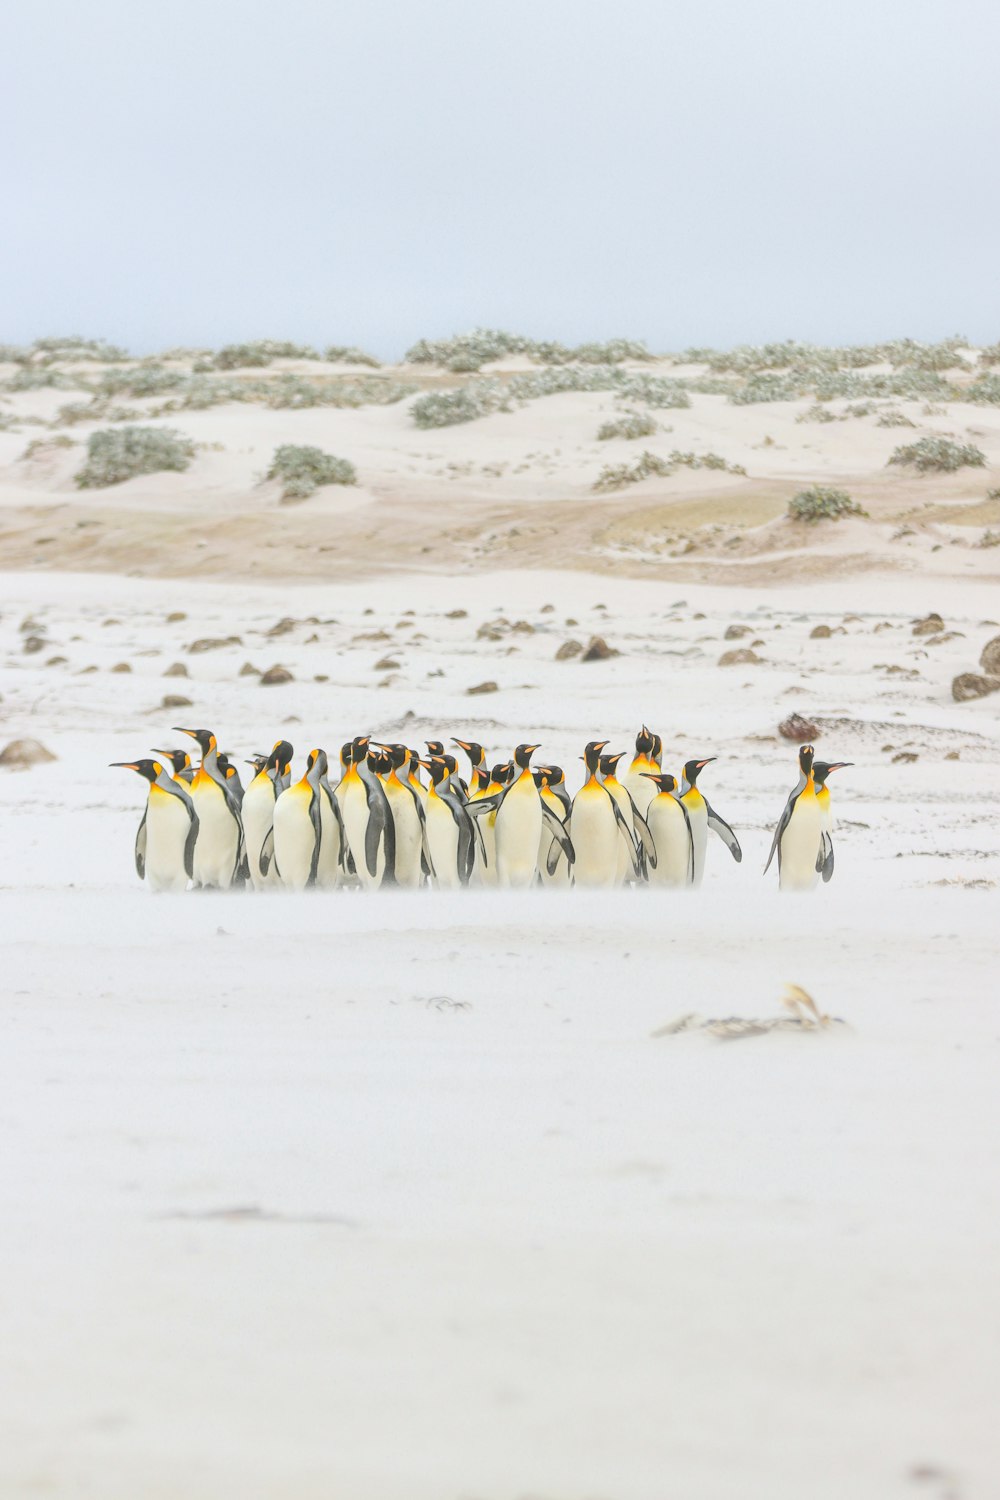 a group of penguins walking across a sandy beach